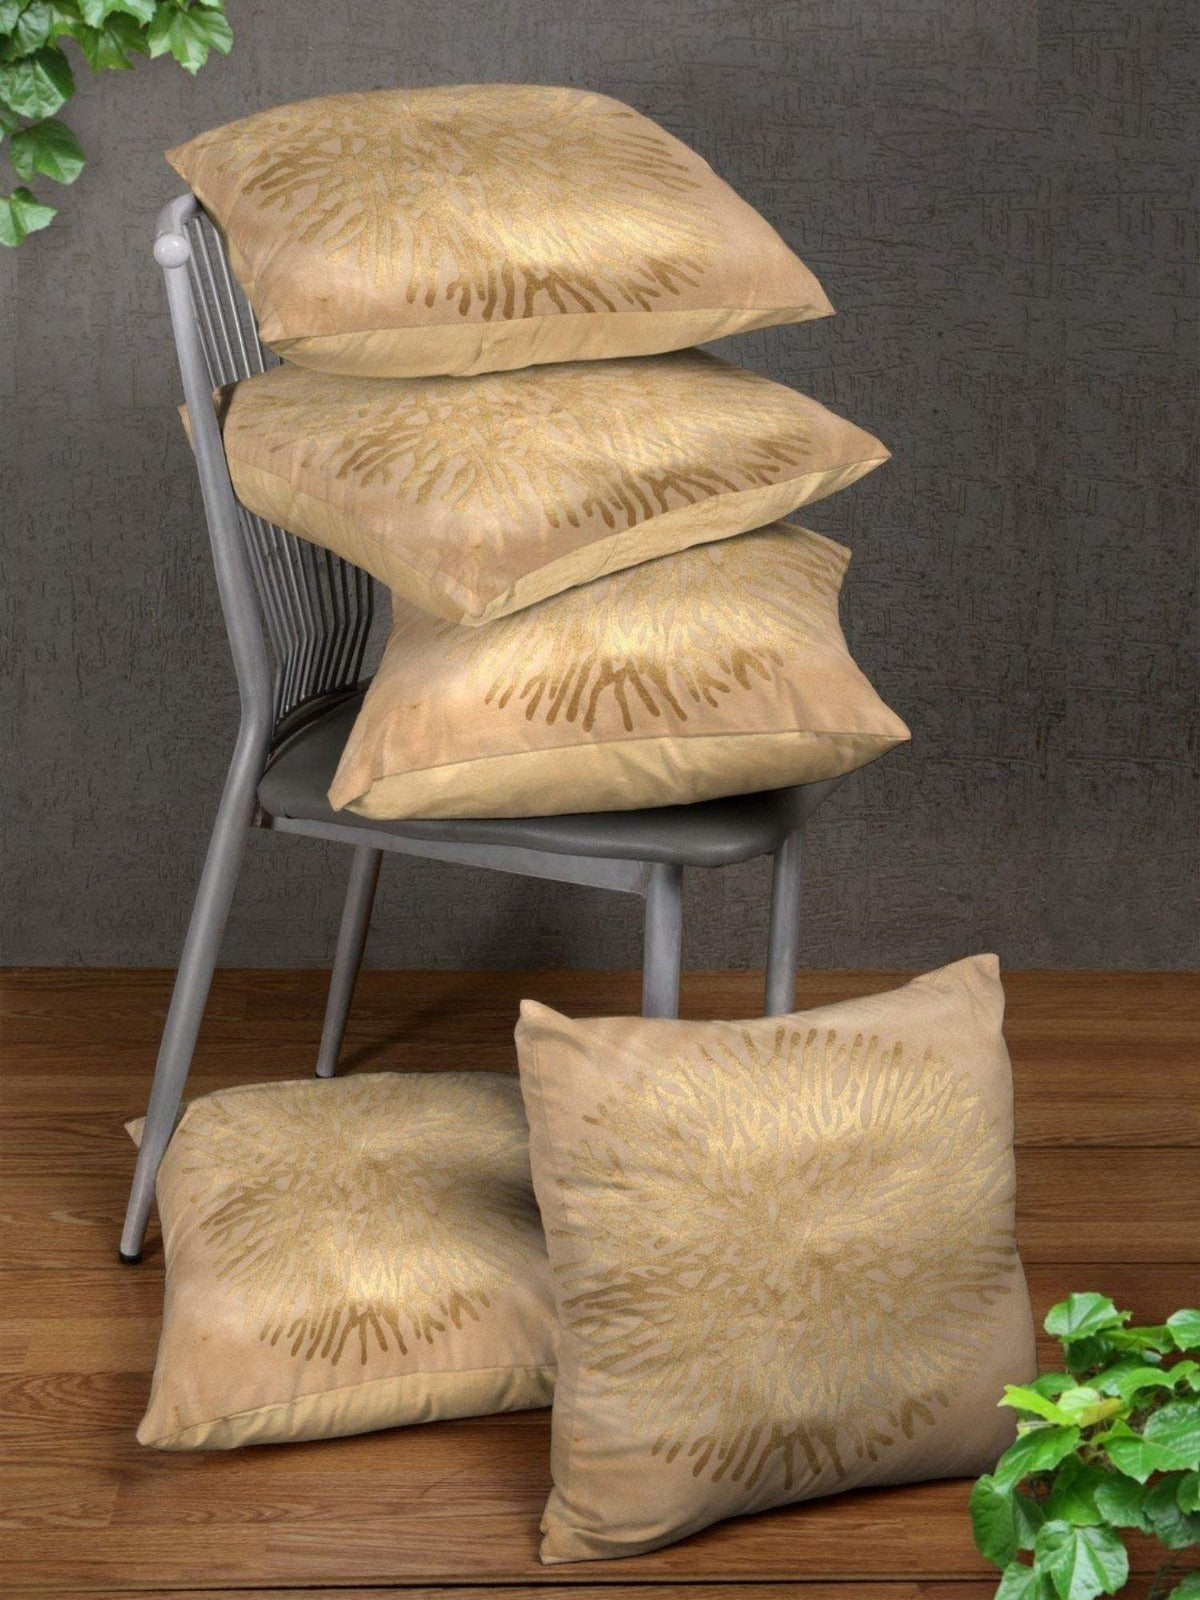 Beige Set of 5 Cushion Covers